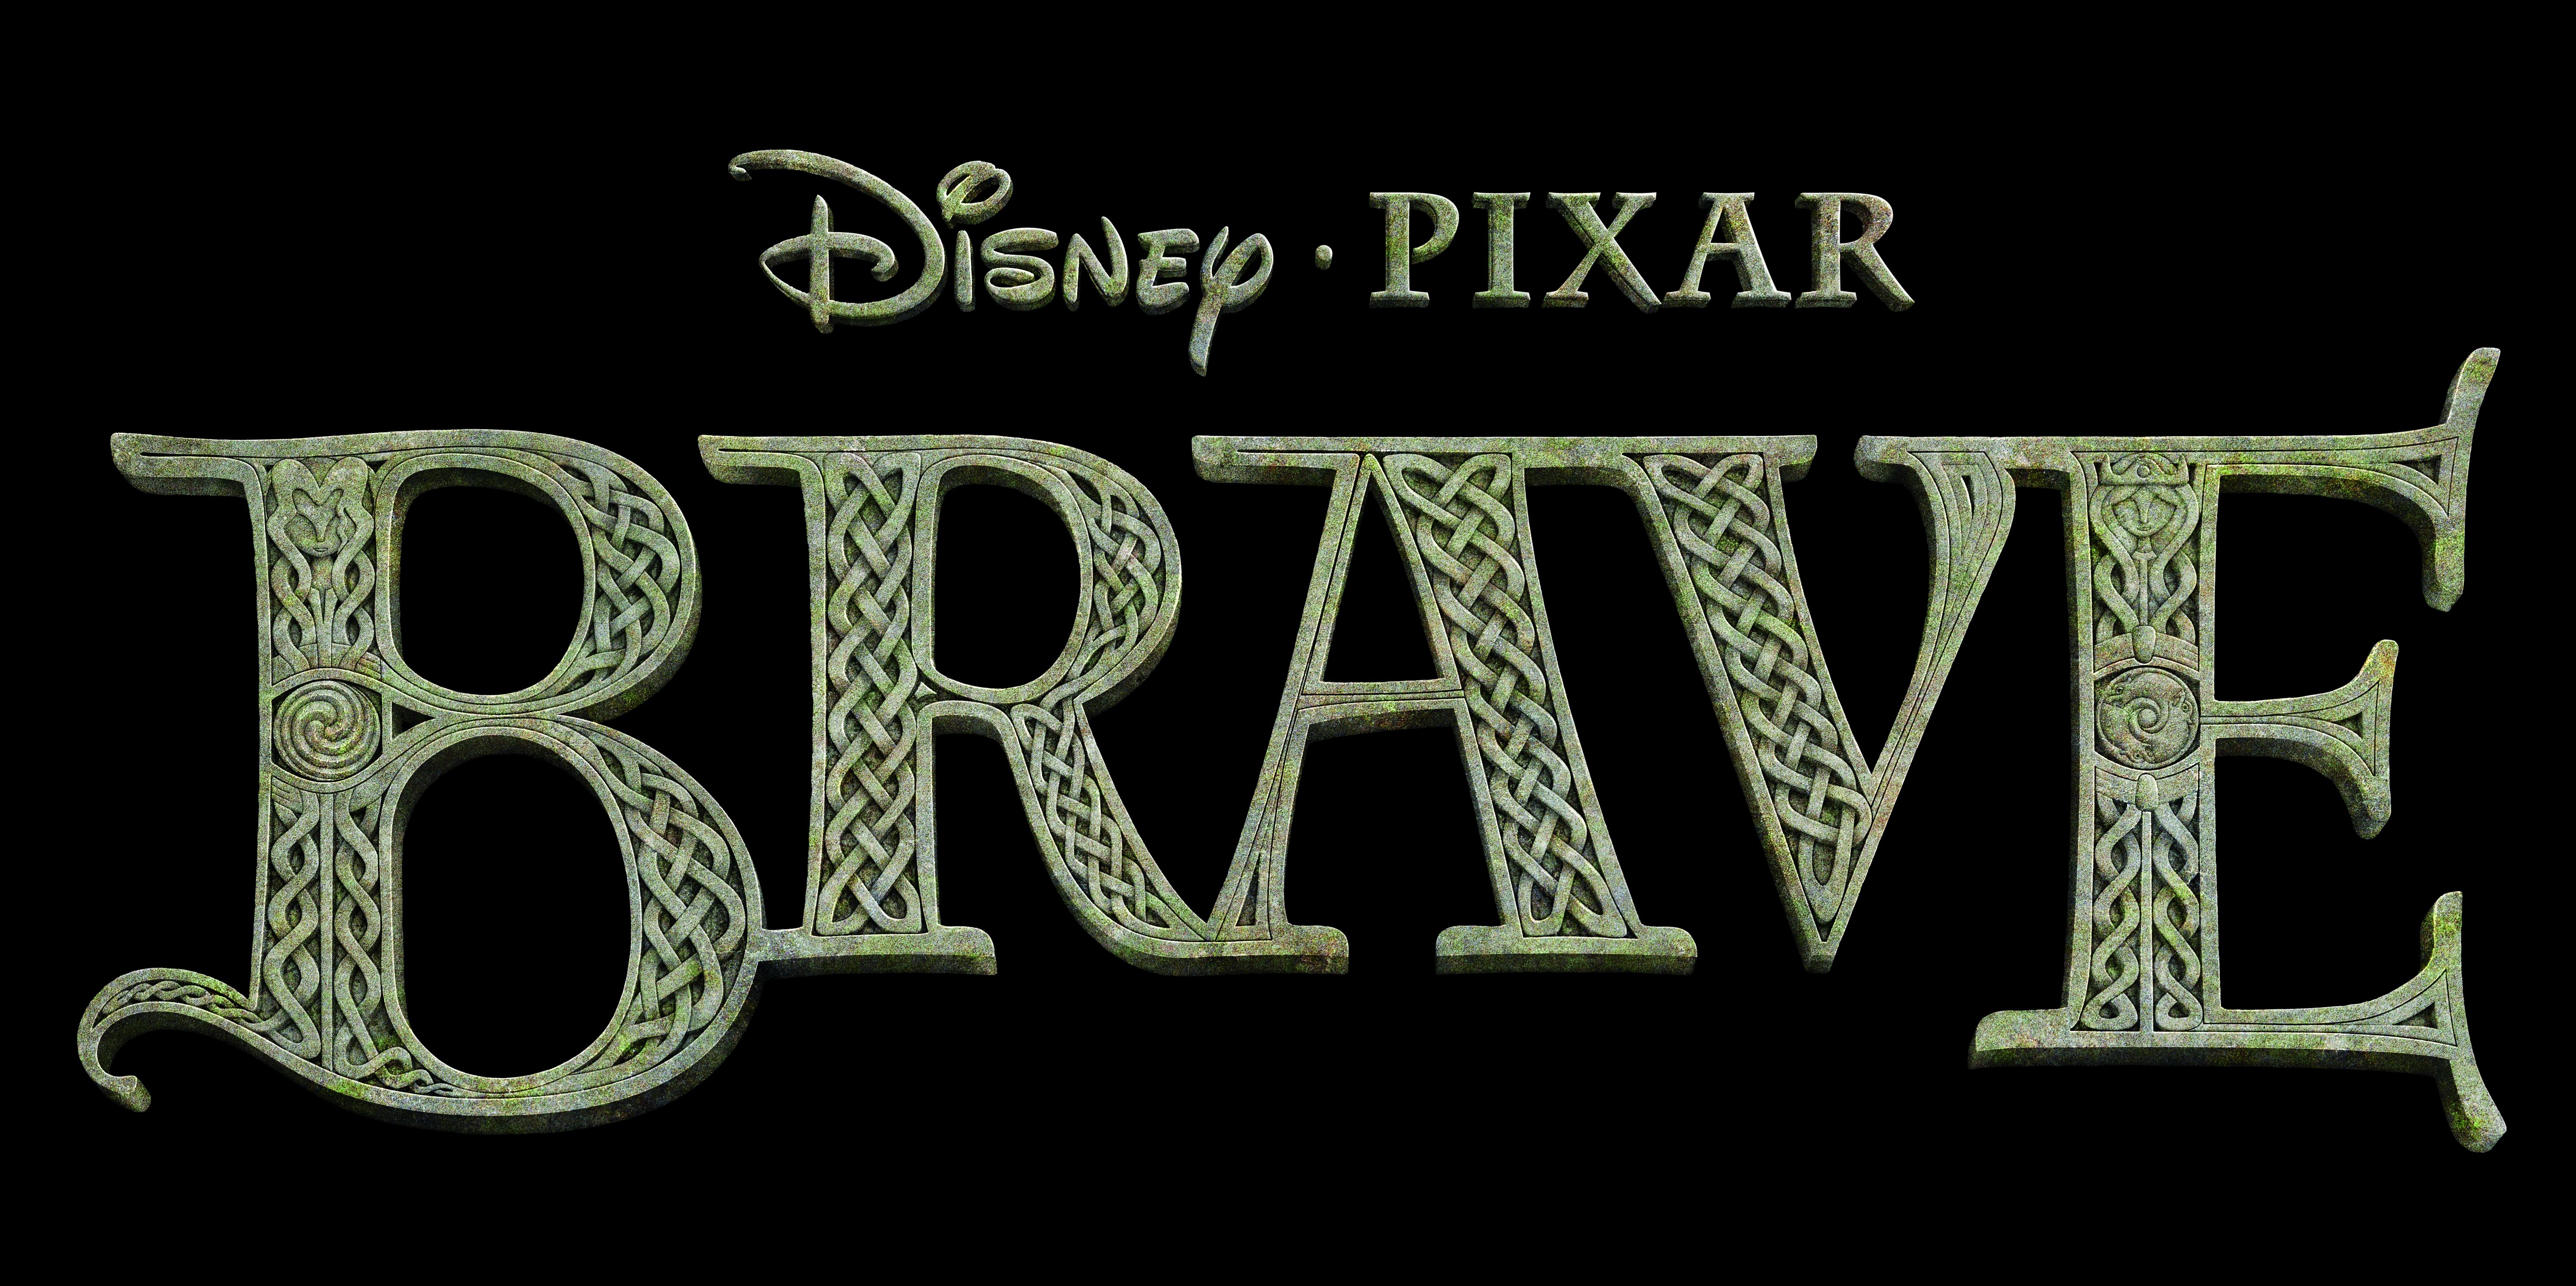 Disney Pixar Brave logo